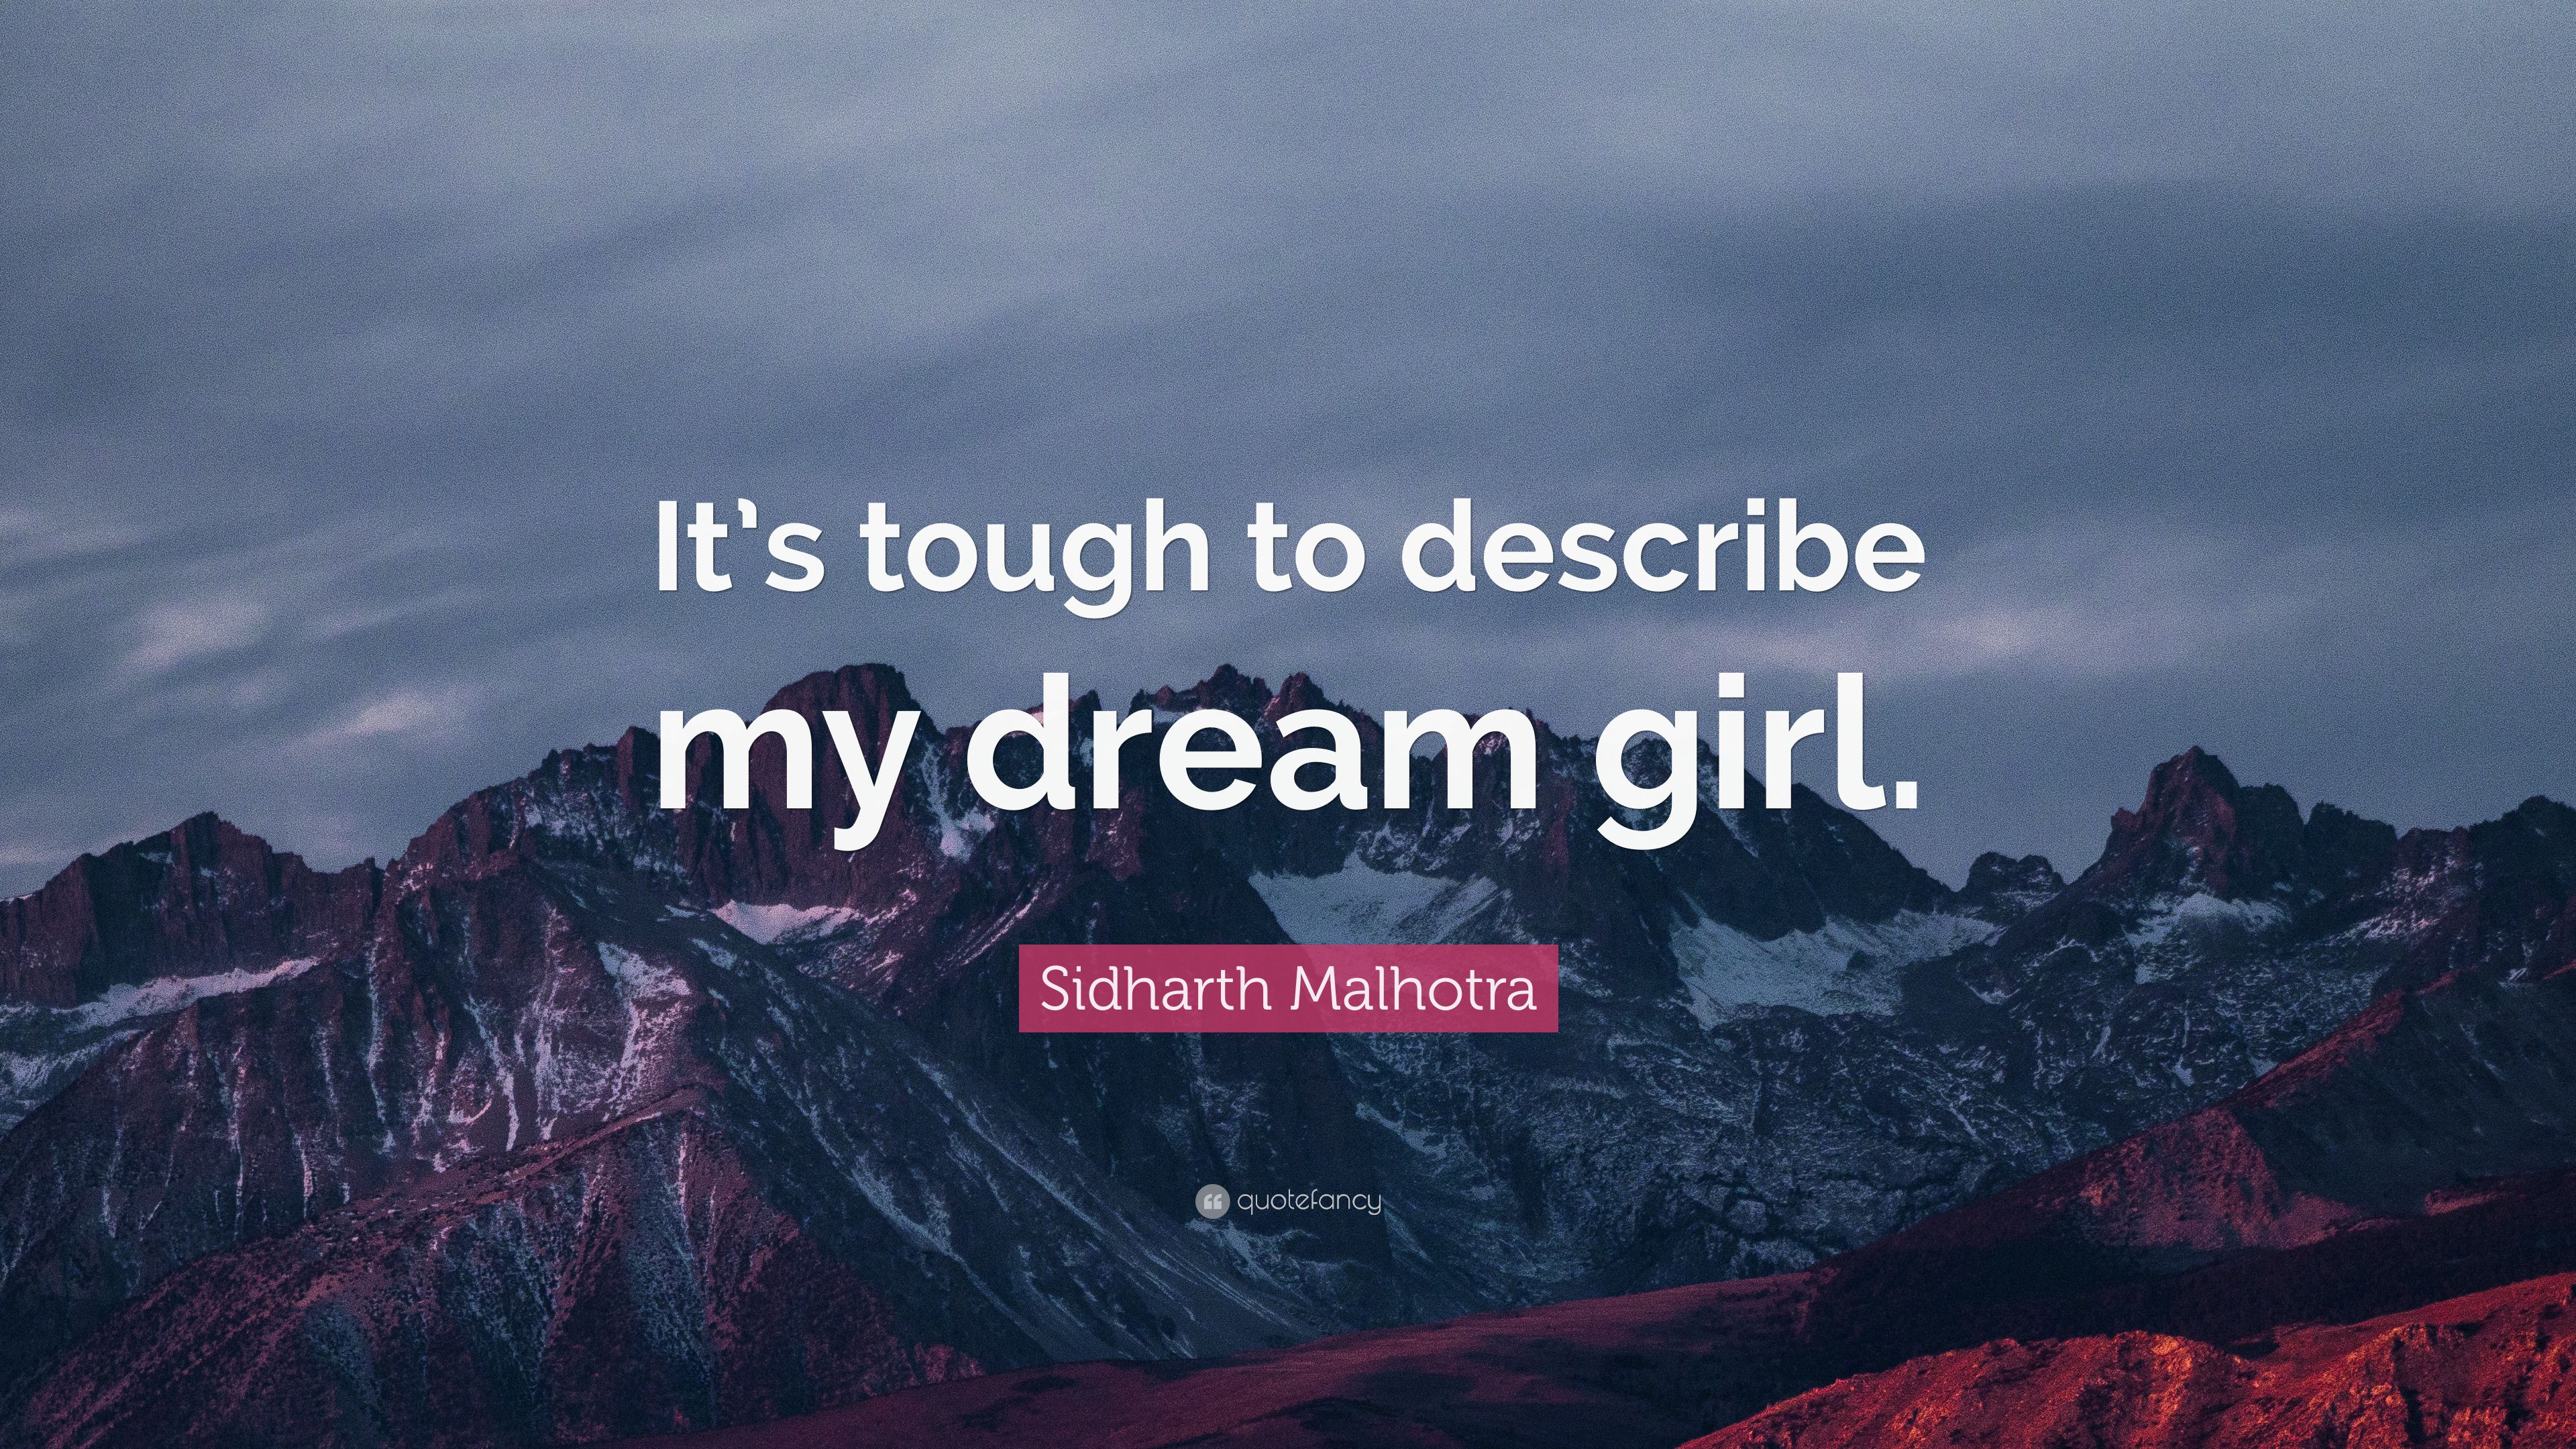 Sidharth Malhotra Quote: “It's tough to describe my dream girl